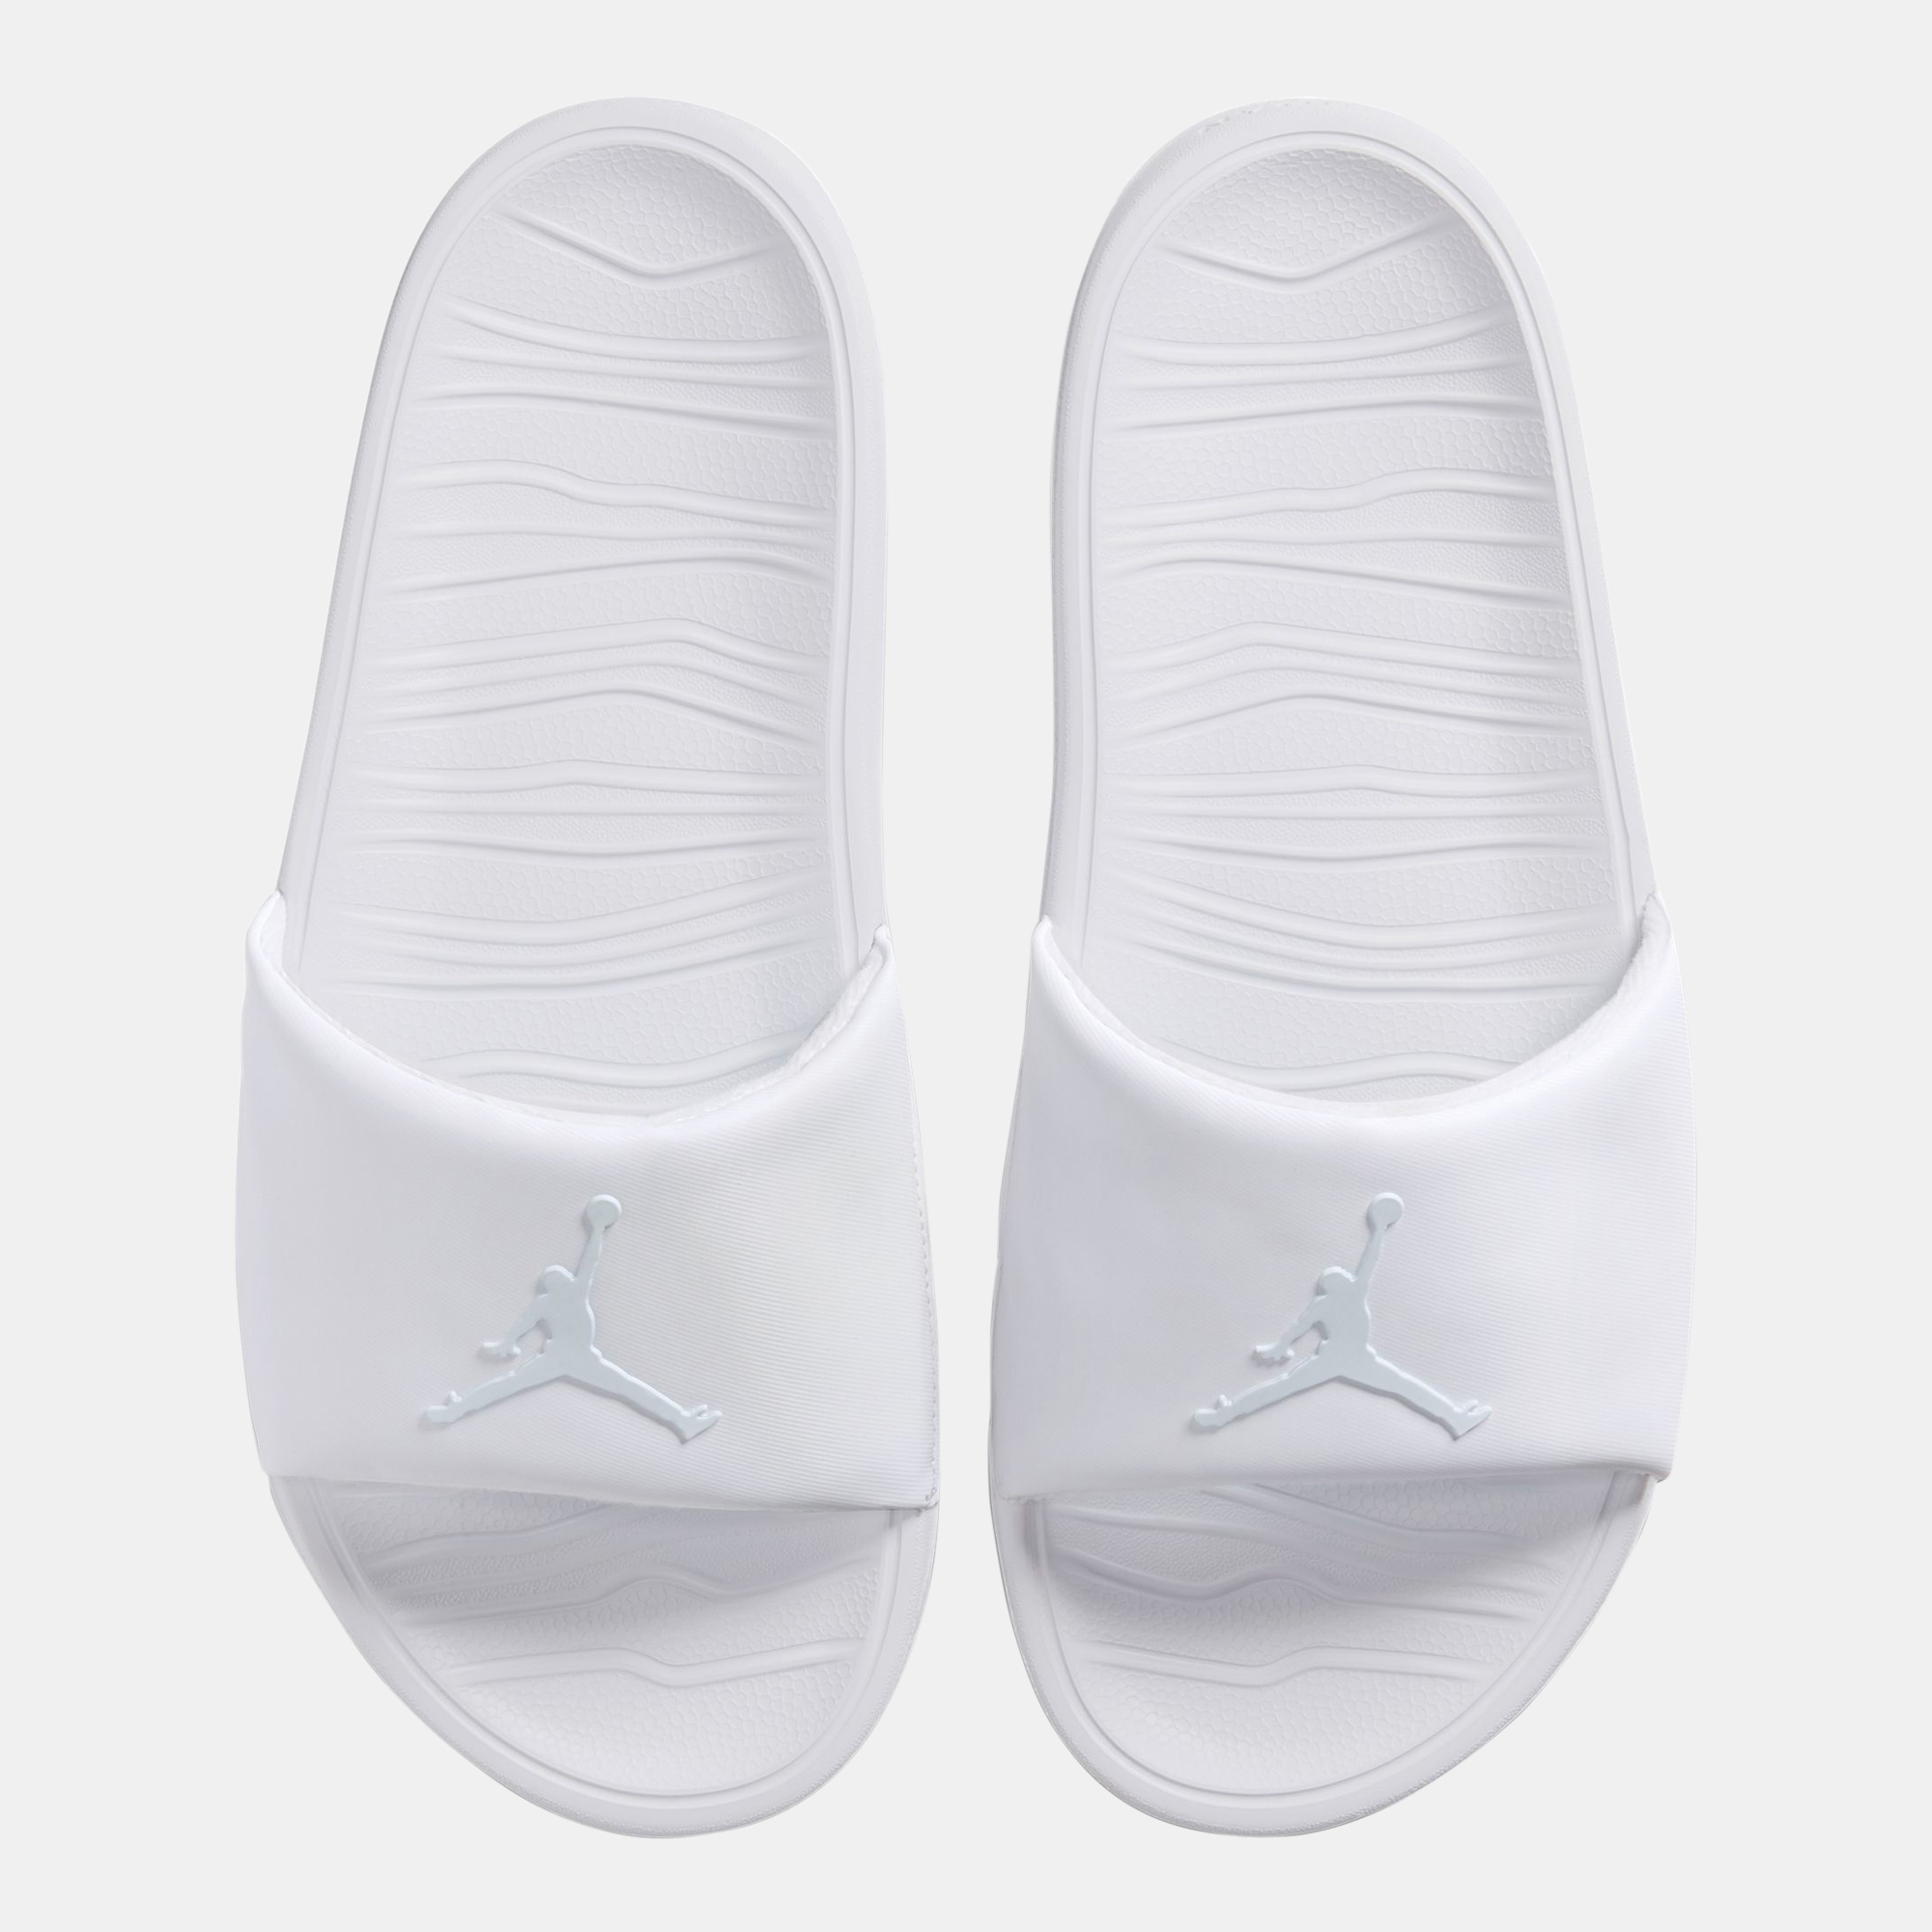 Cheap Size 9 Adidas Yeezy Boost 350 V2 Cream Whitetriple White 2017